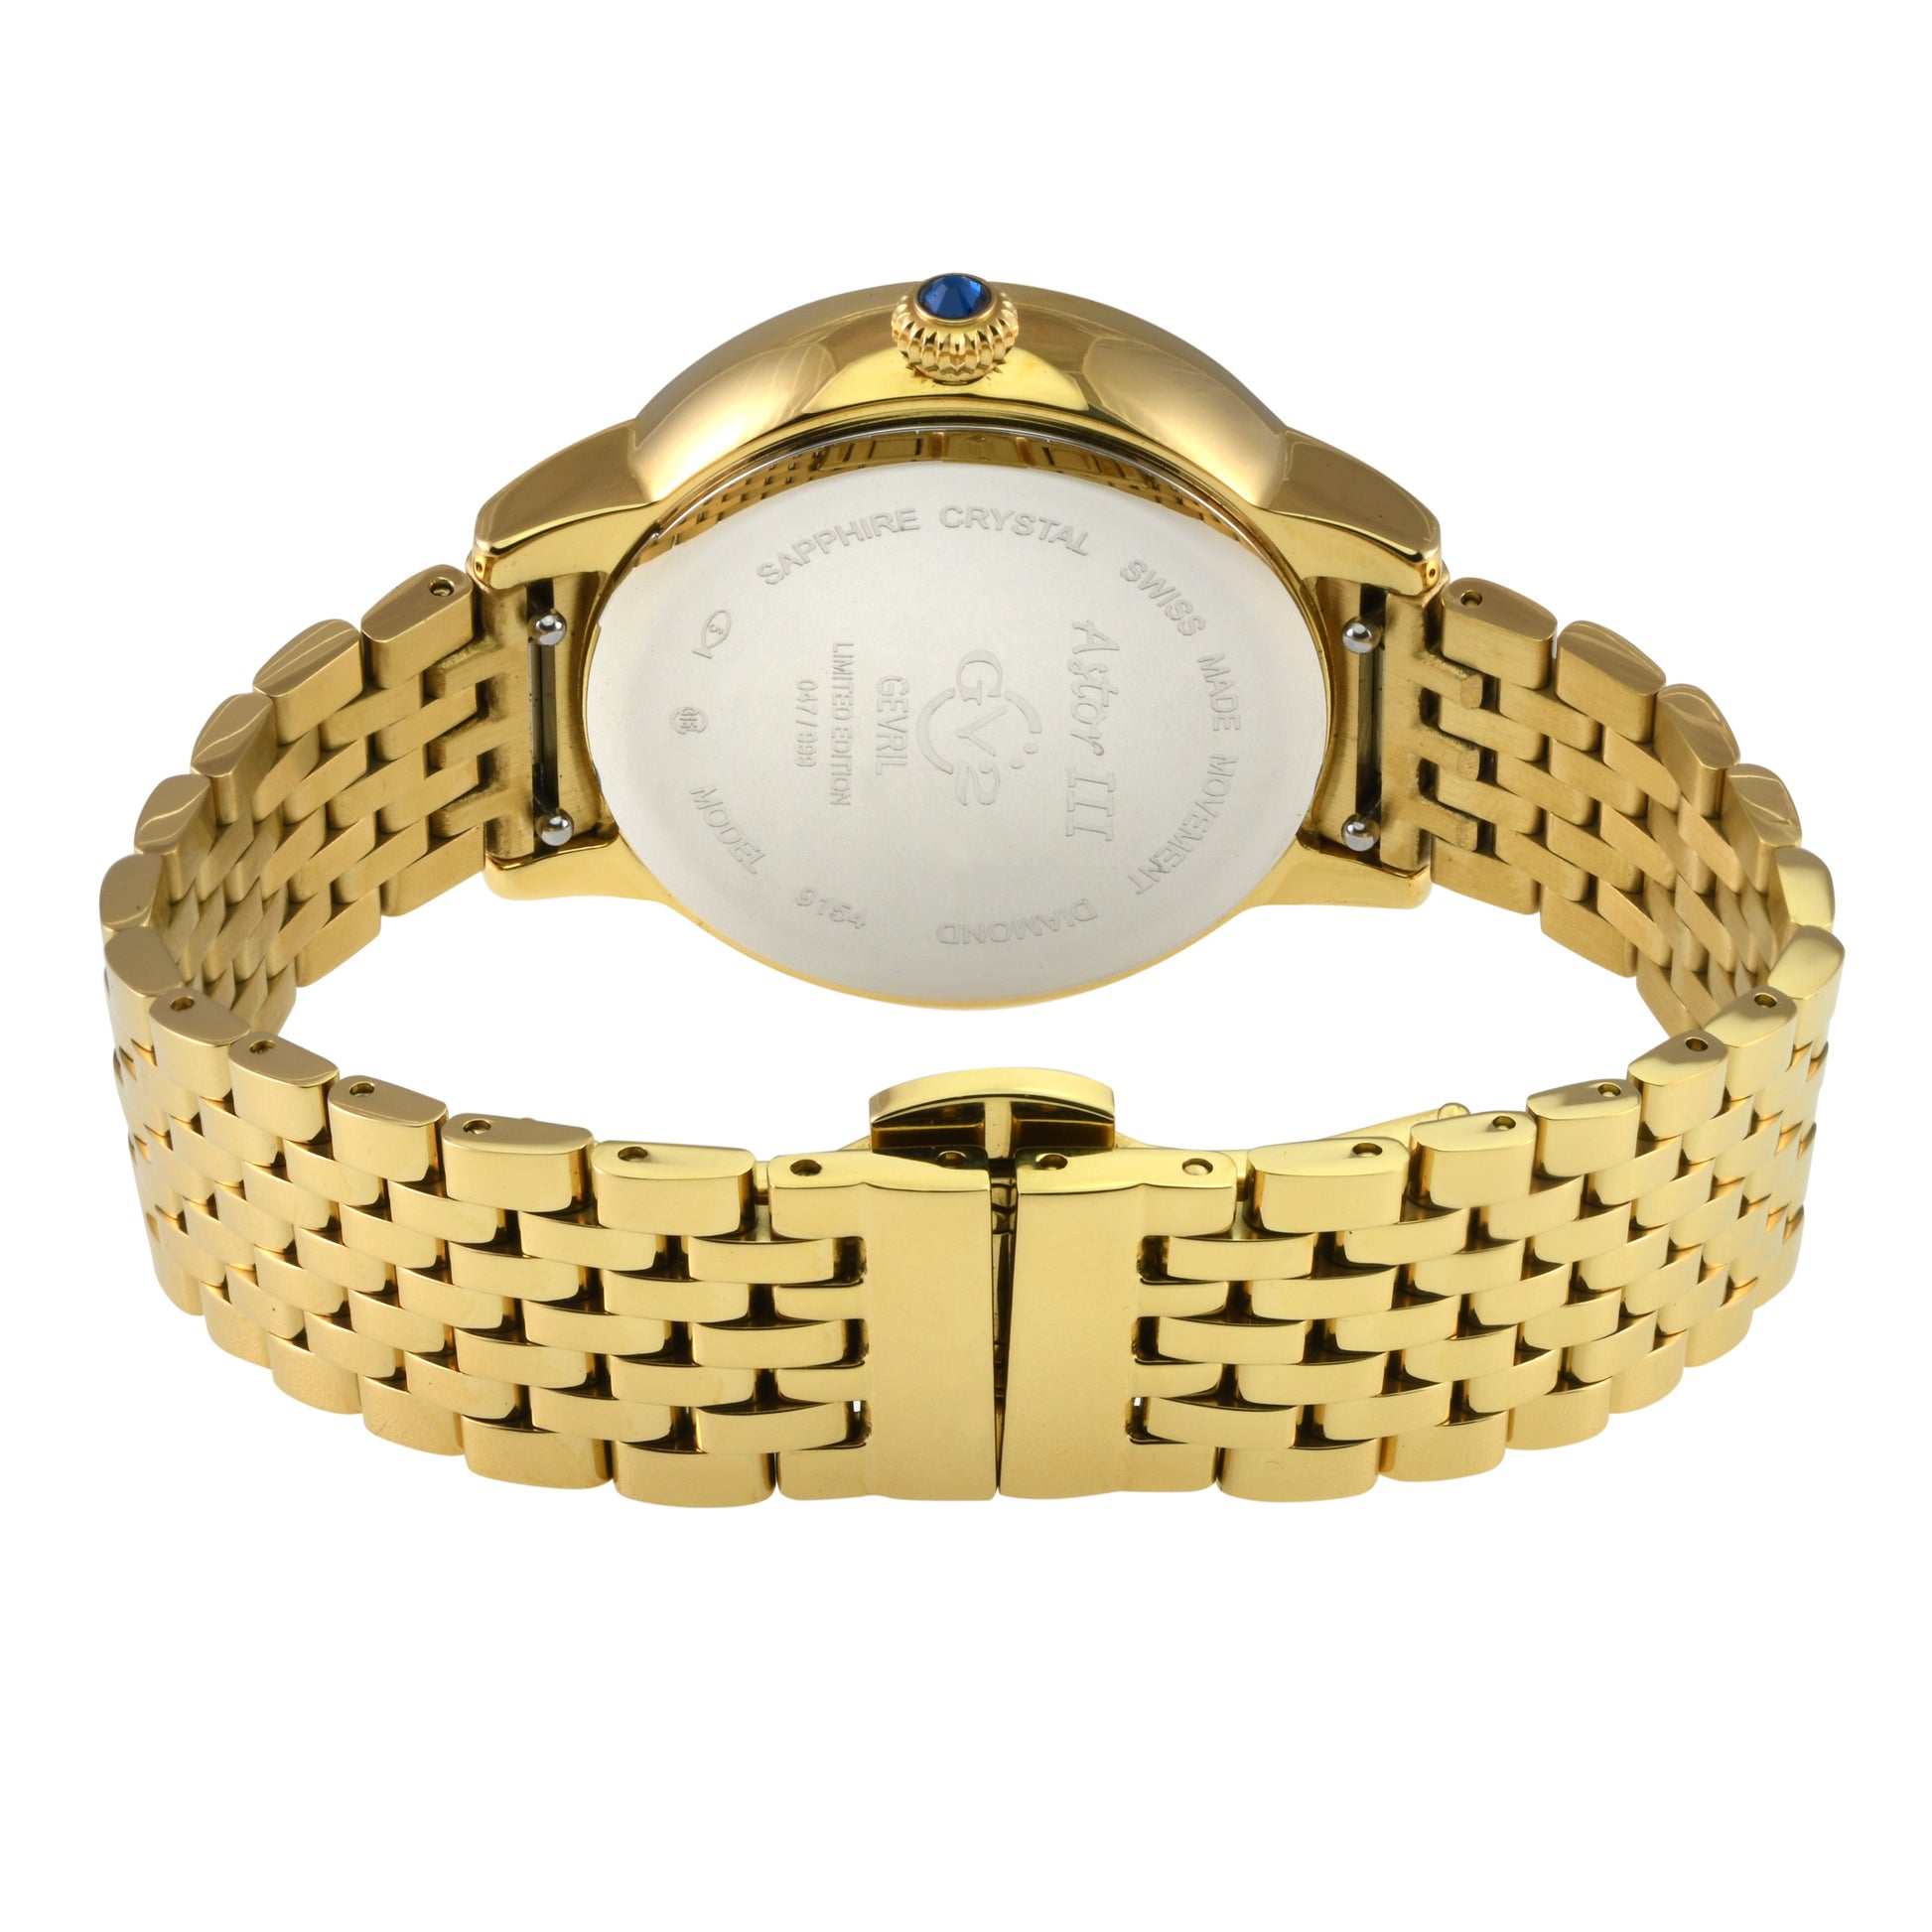 Gevril-Luxury-Swiss-Watches-GV2 Astor III Diamond-9154B